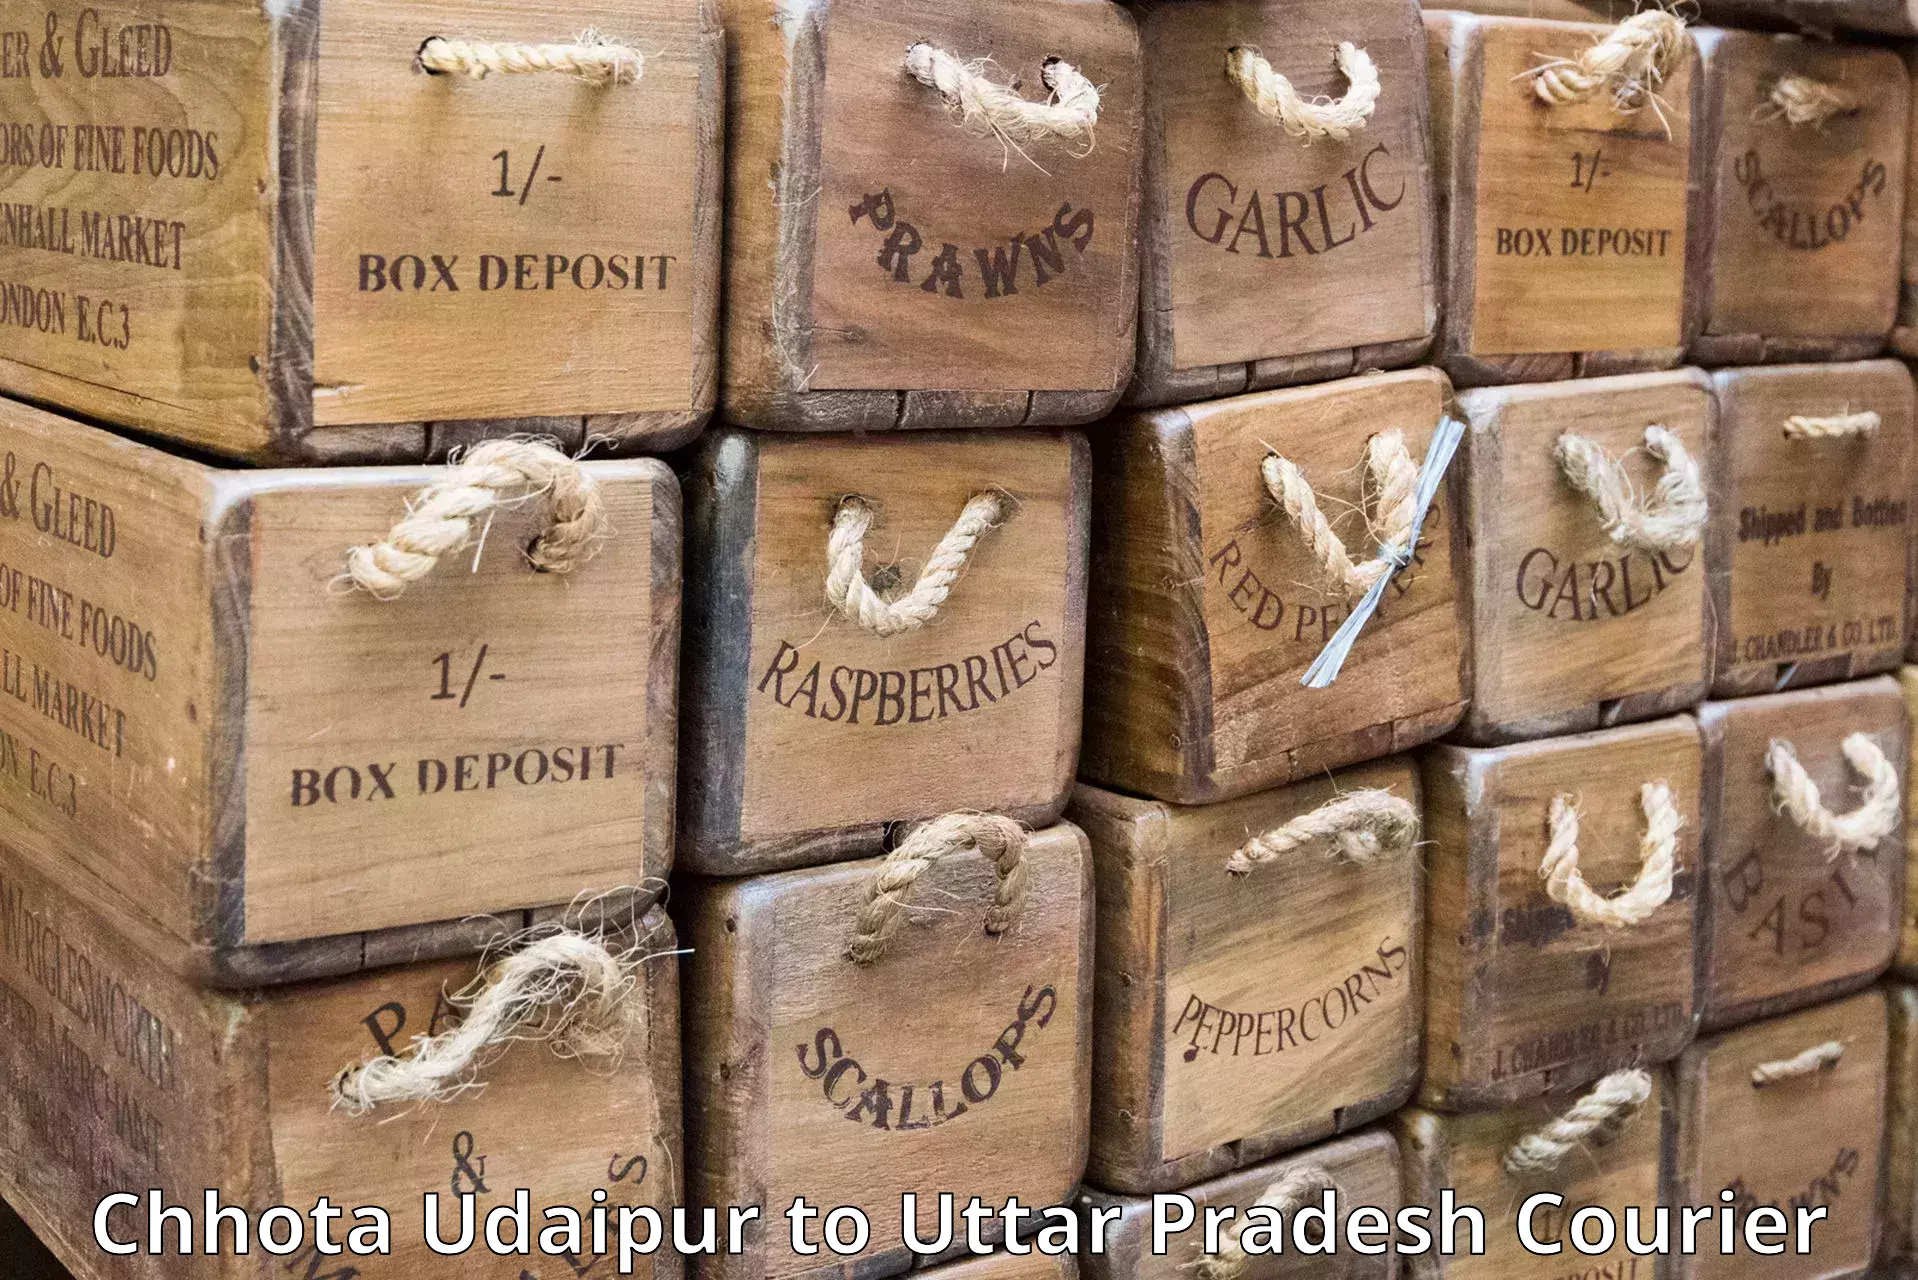 24-hour courier service Chhota Udaipur to Kuru